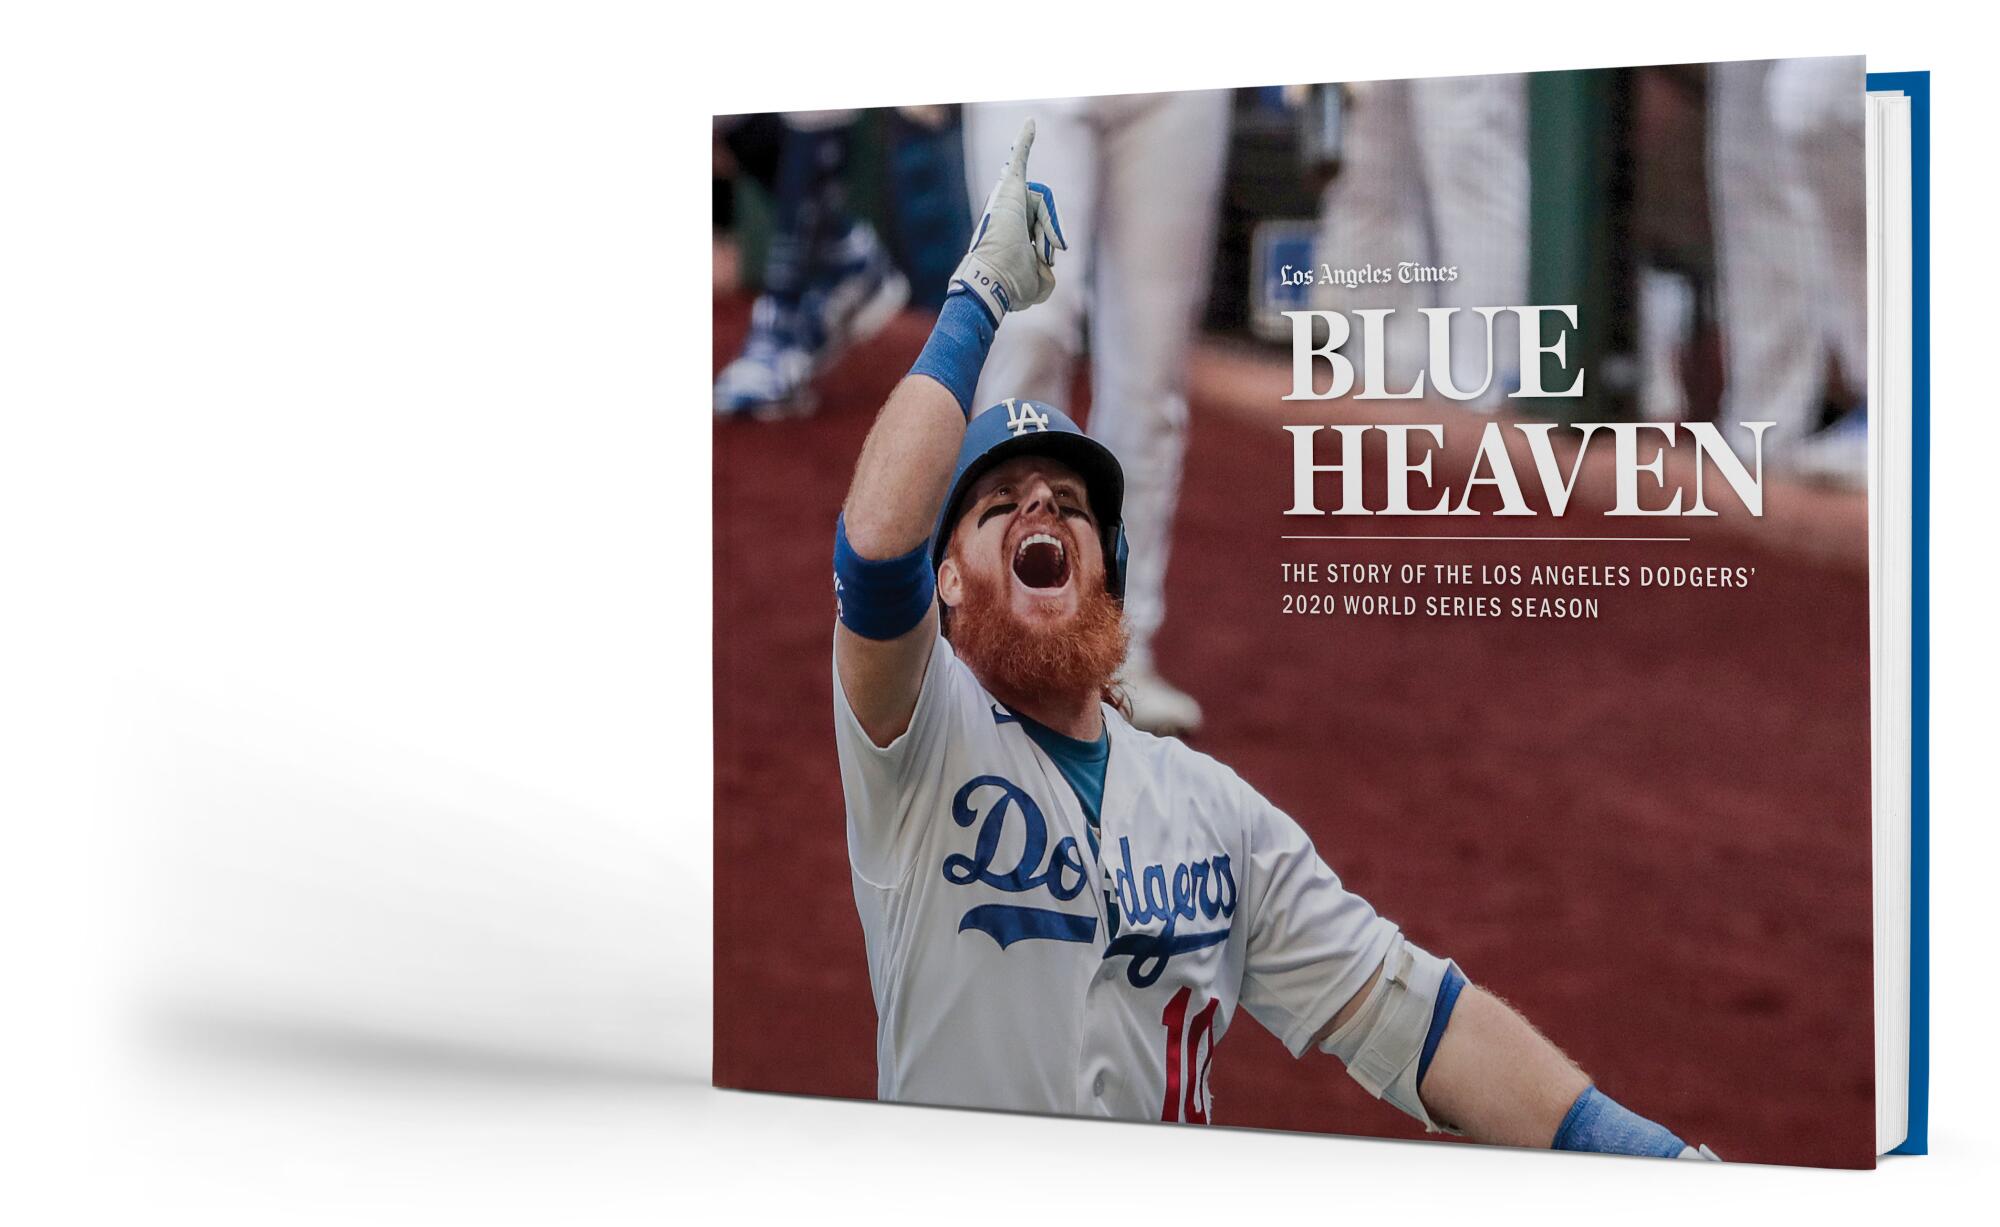 "Blue Heaven," a commemorative book celebrating the Dodgers' championship 2020 season